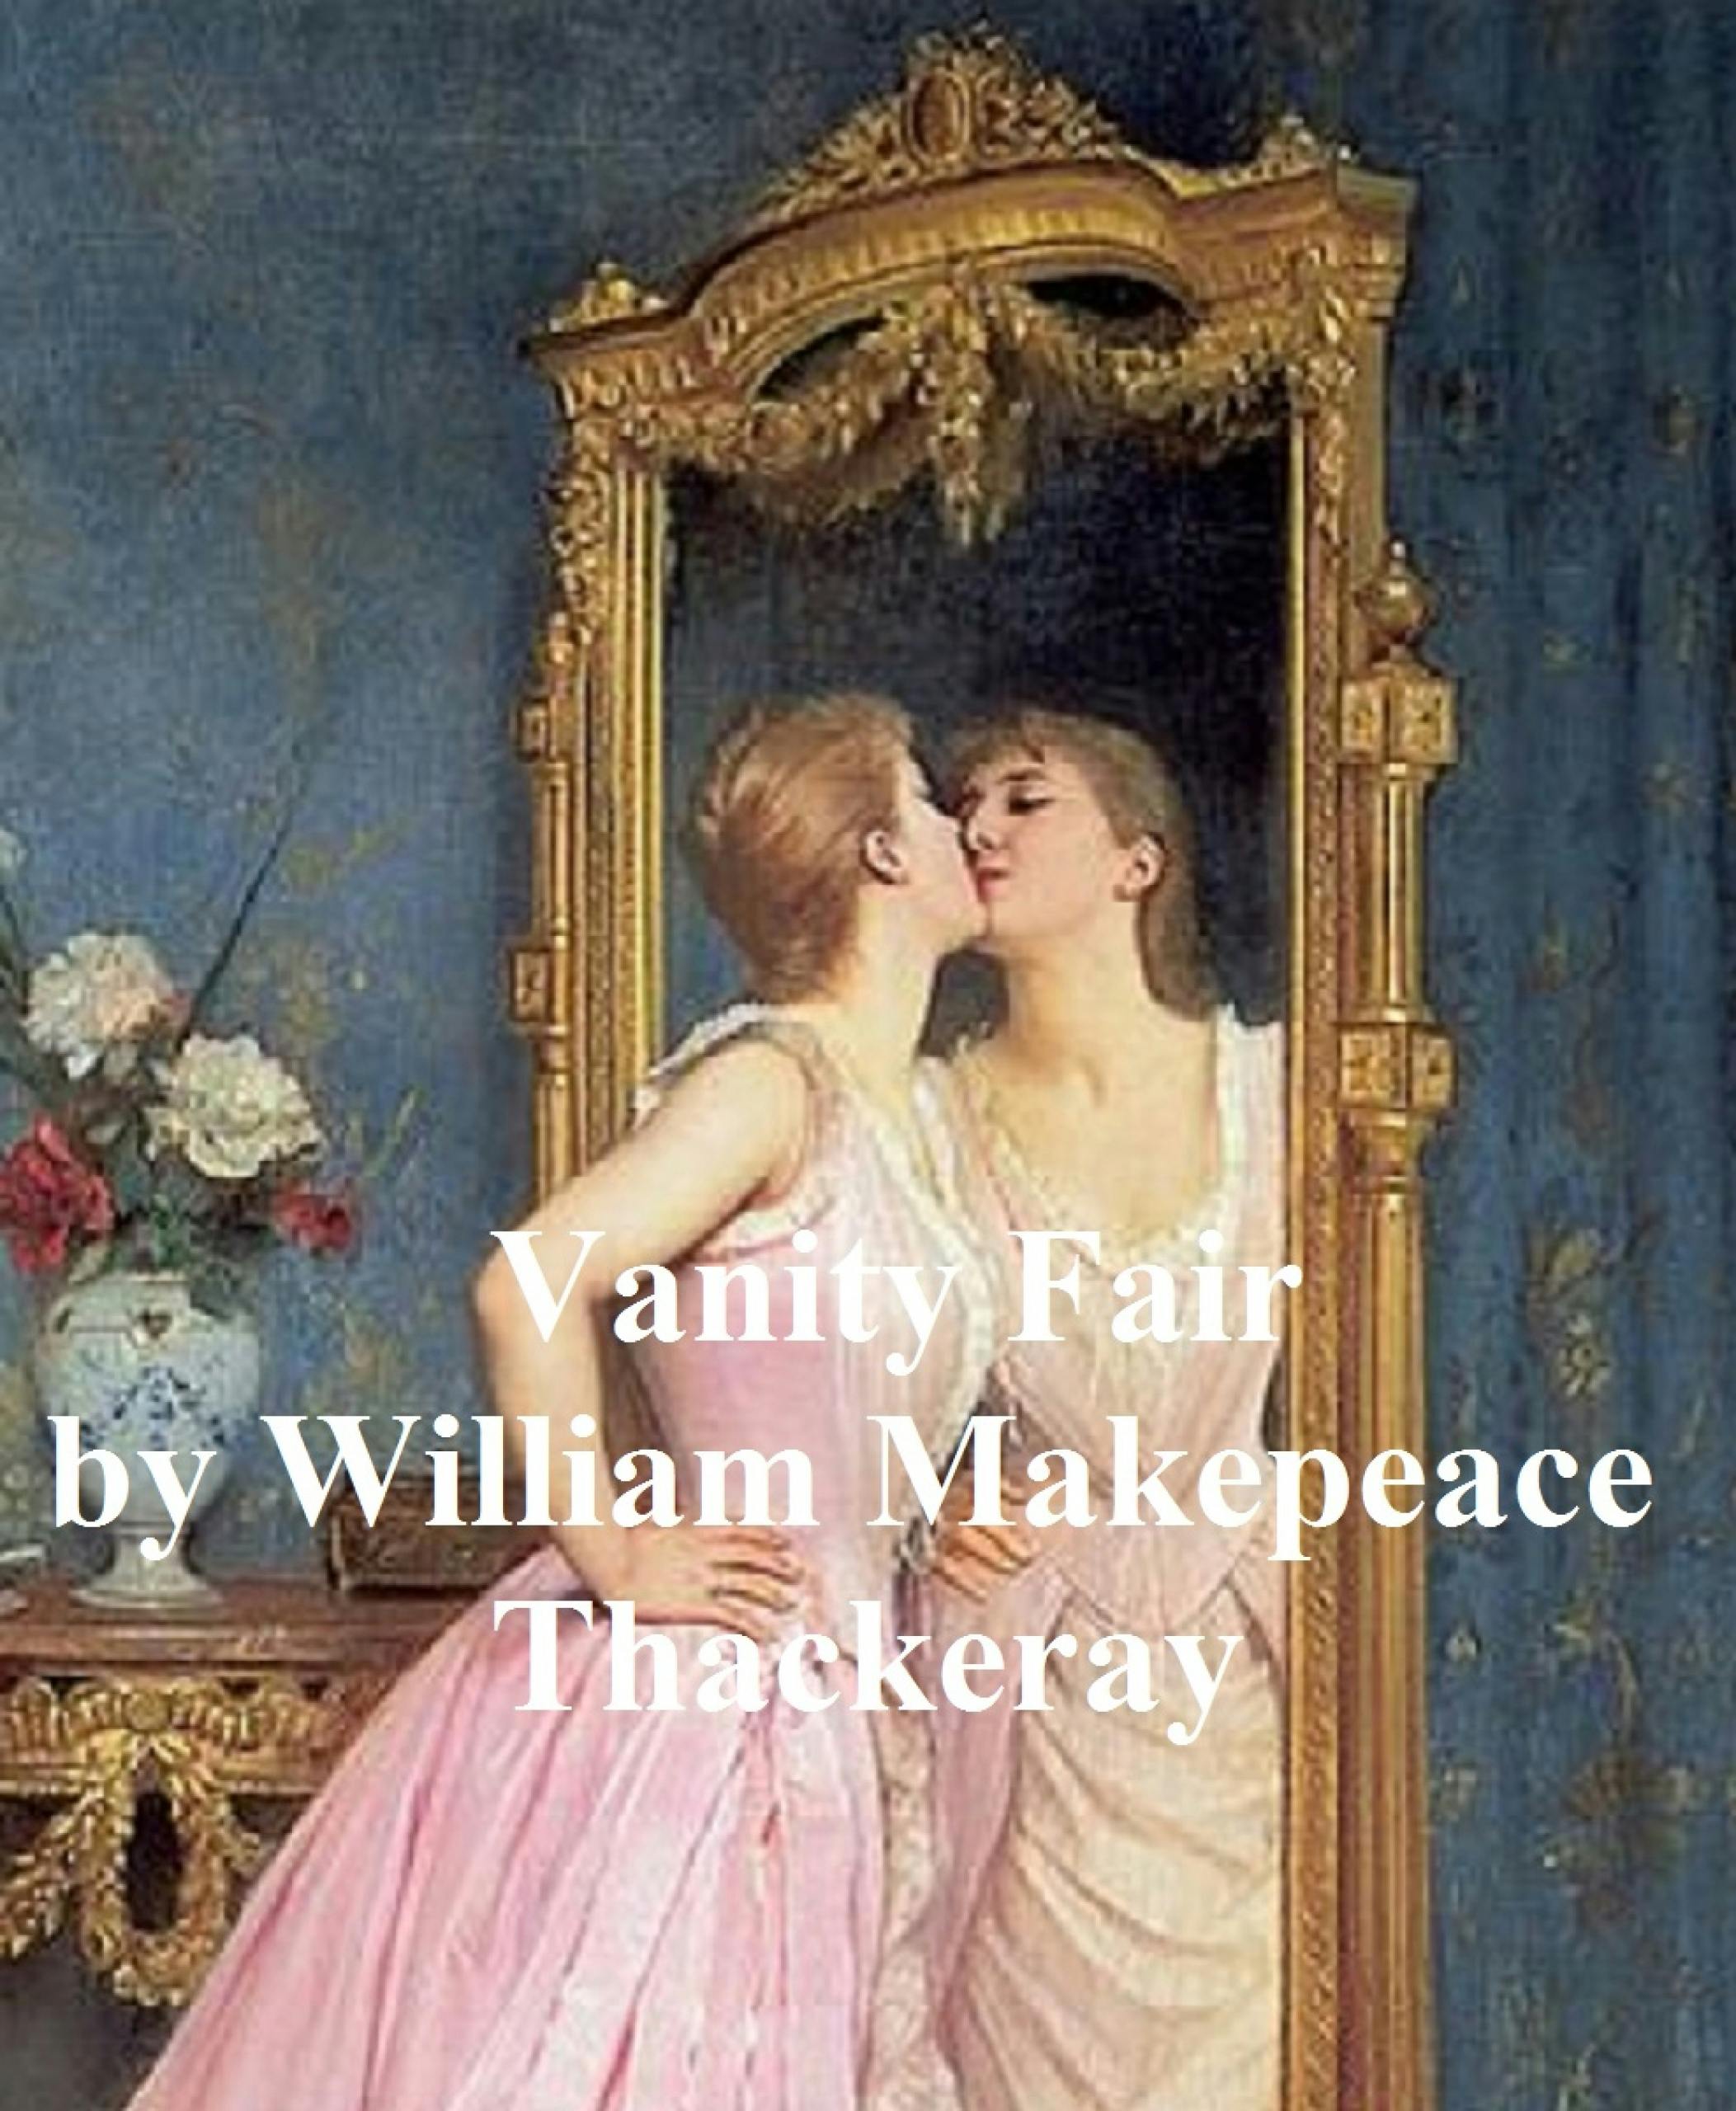 William Makepeace Thackeray - Wikipedia